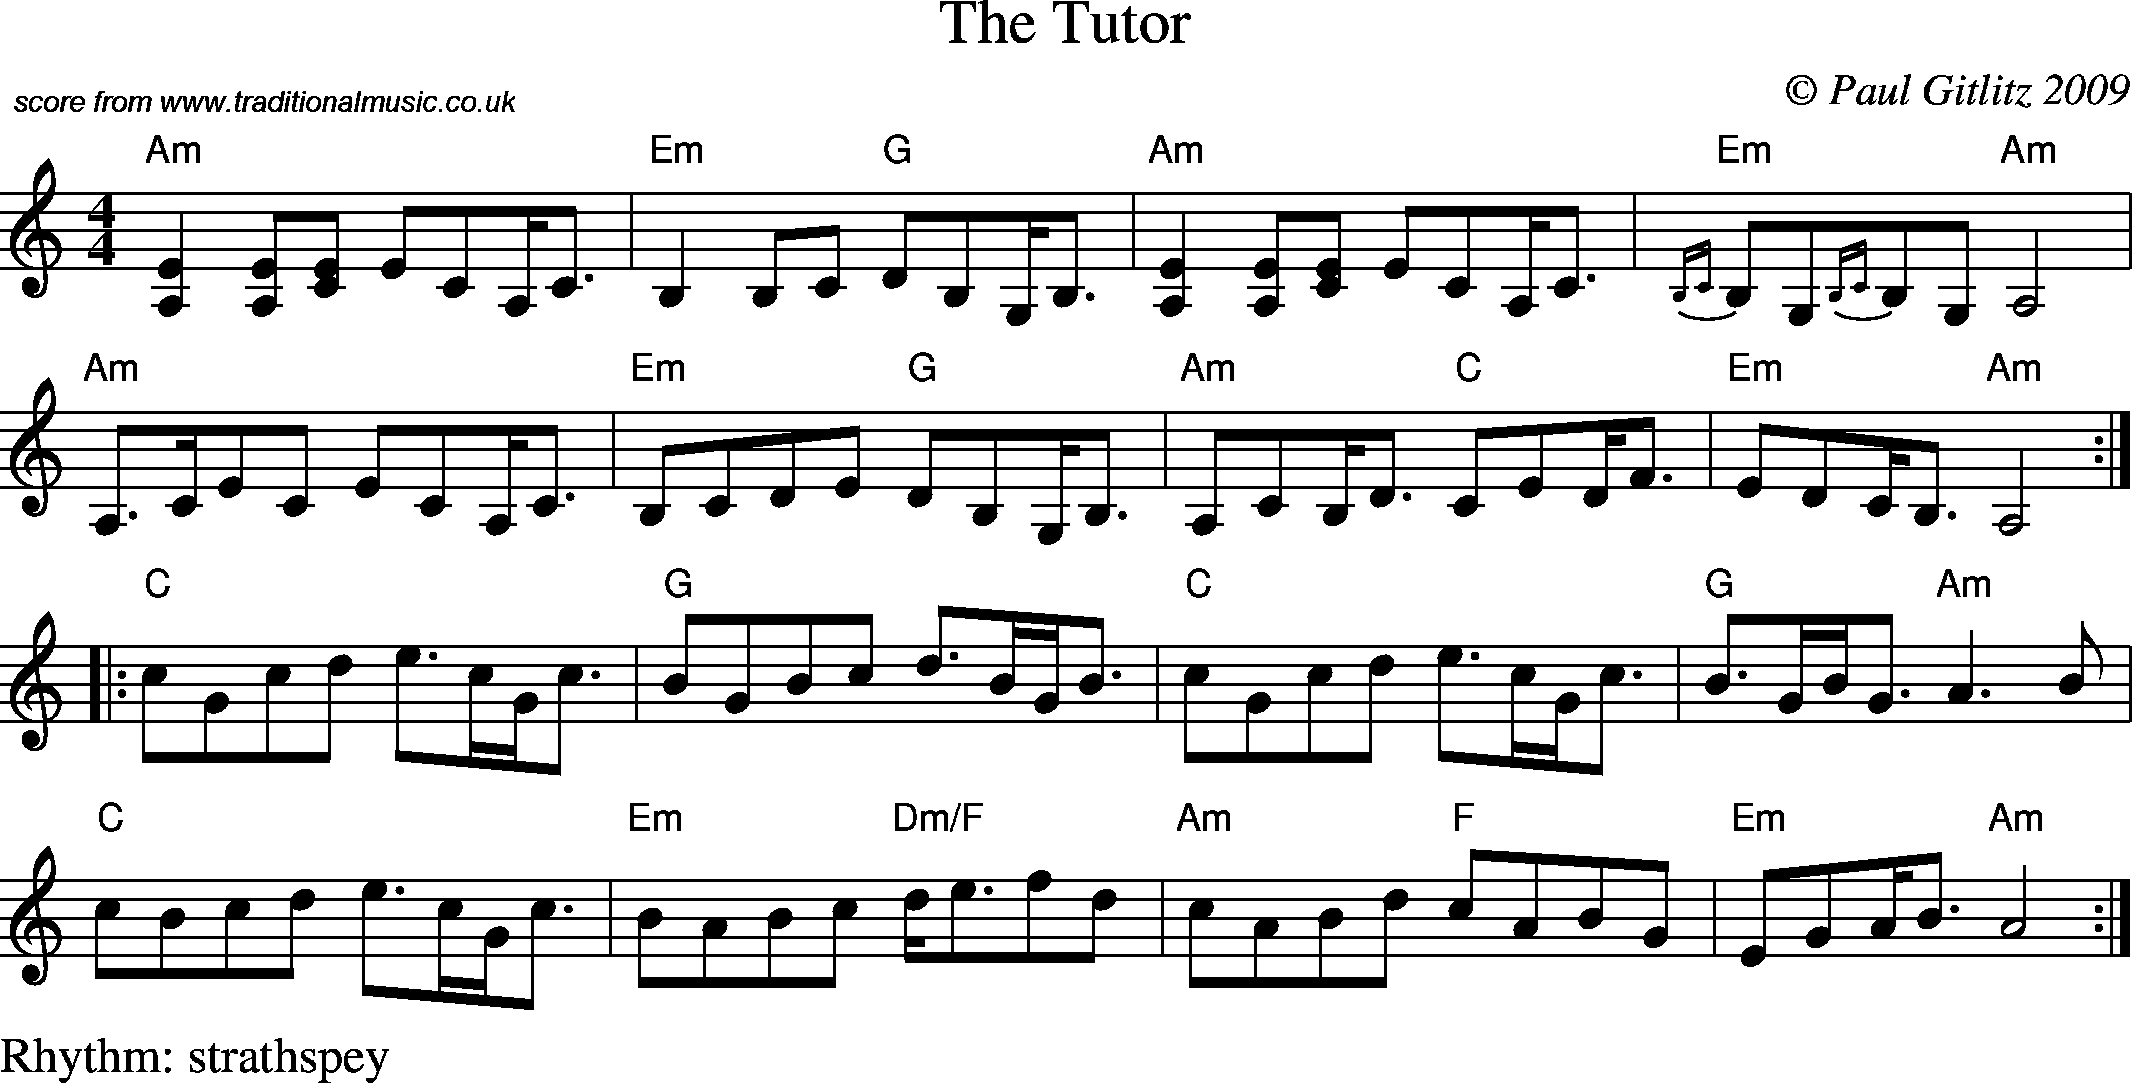 Sheet Music Score for Hornpipe/Strathspey - Tutor, The